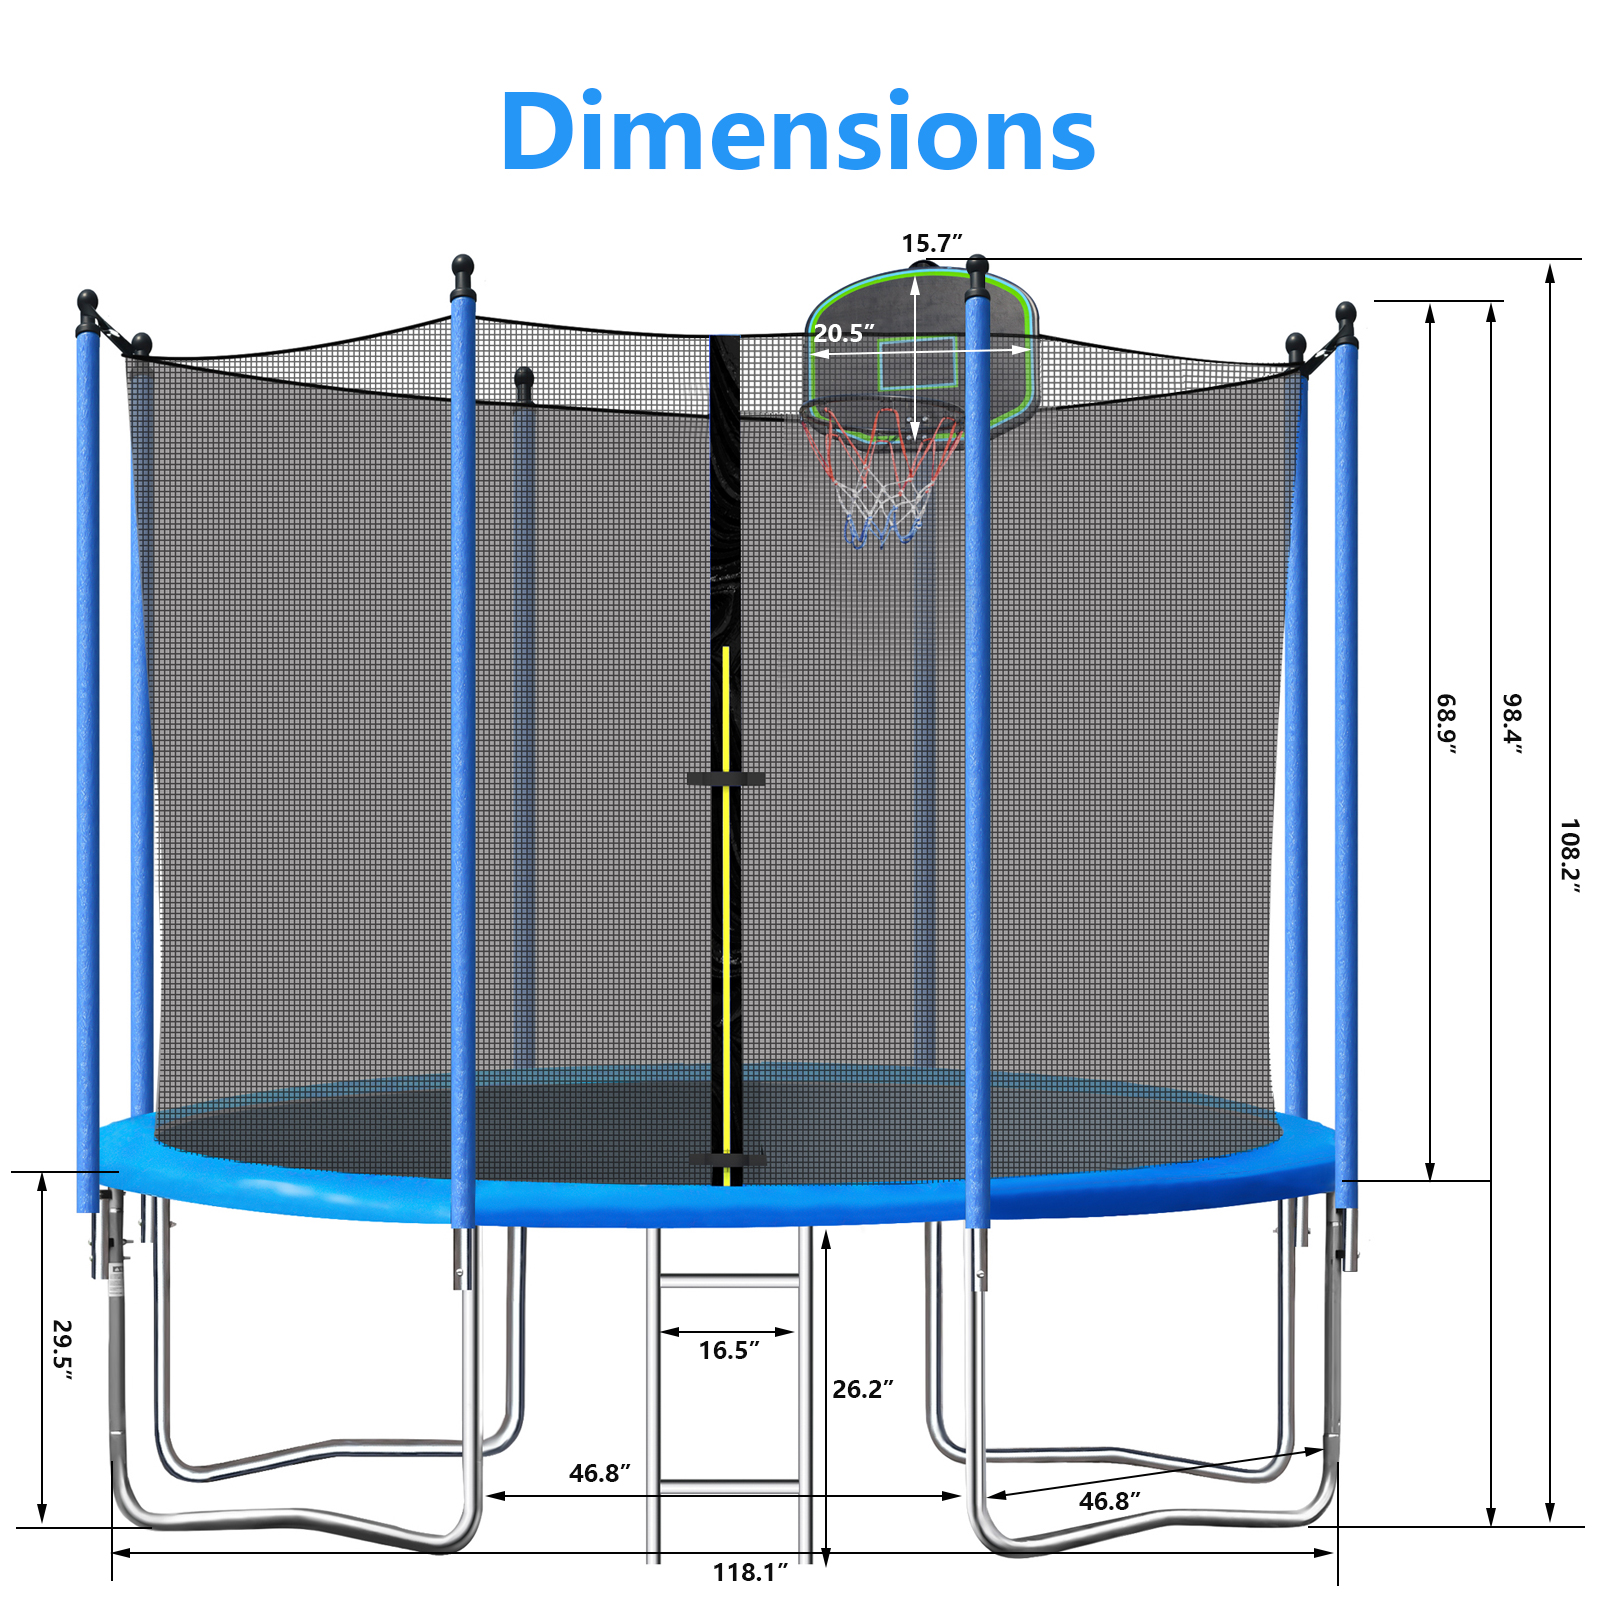 SEGMART 10ft Trampoline for Kids with Basketball Hoop and Enclosure Net/Ladder,Blue - image 5 of 7